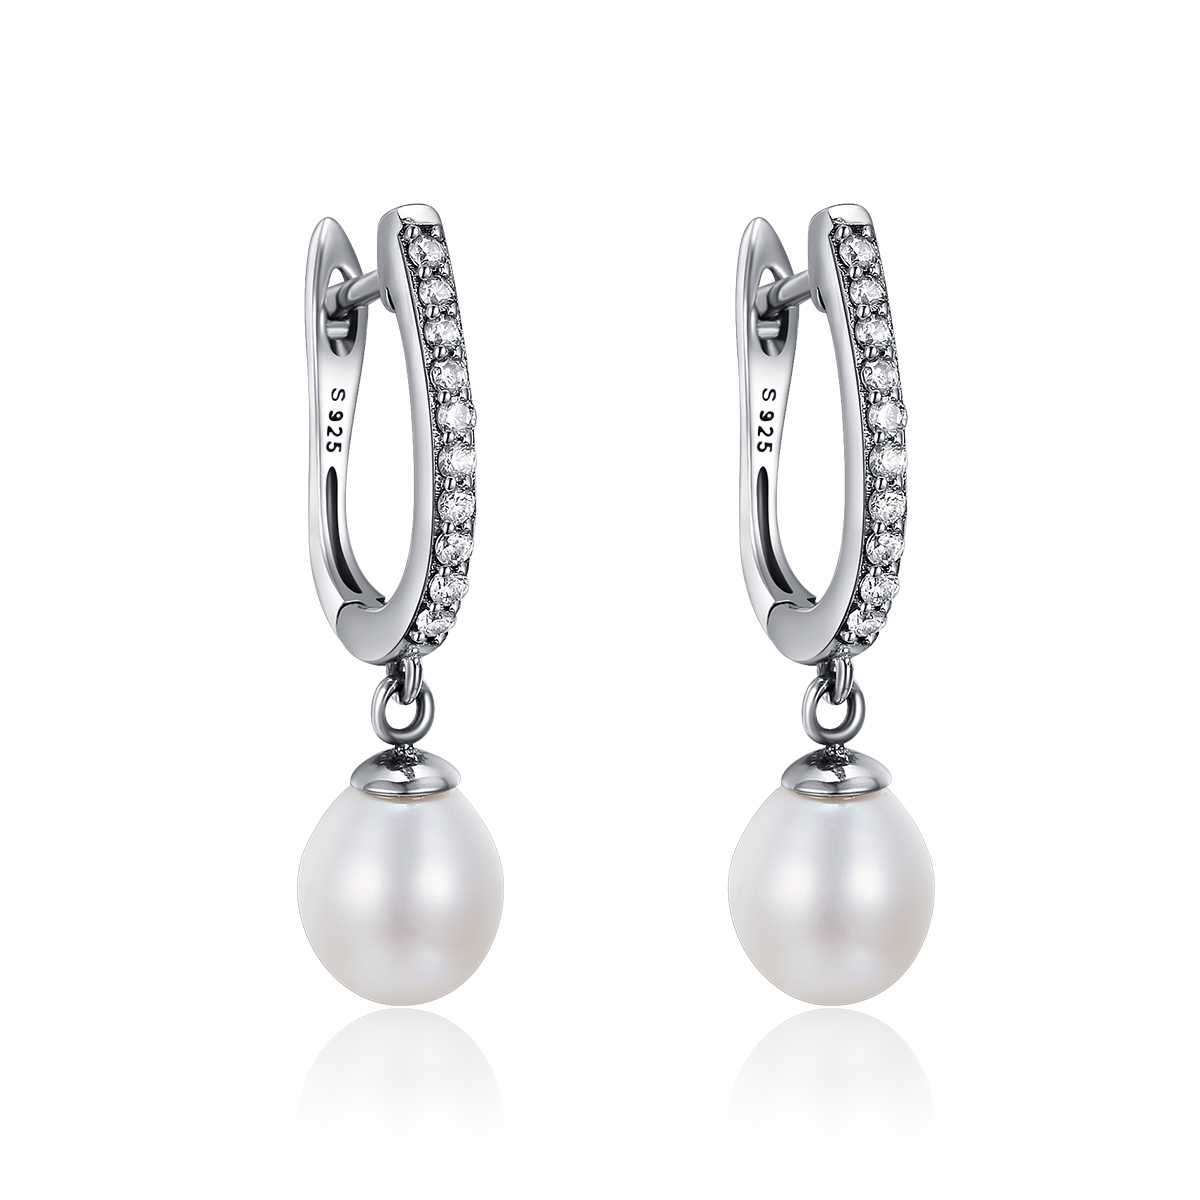 Cercei argint eleganti cu perle si zirconii